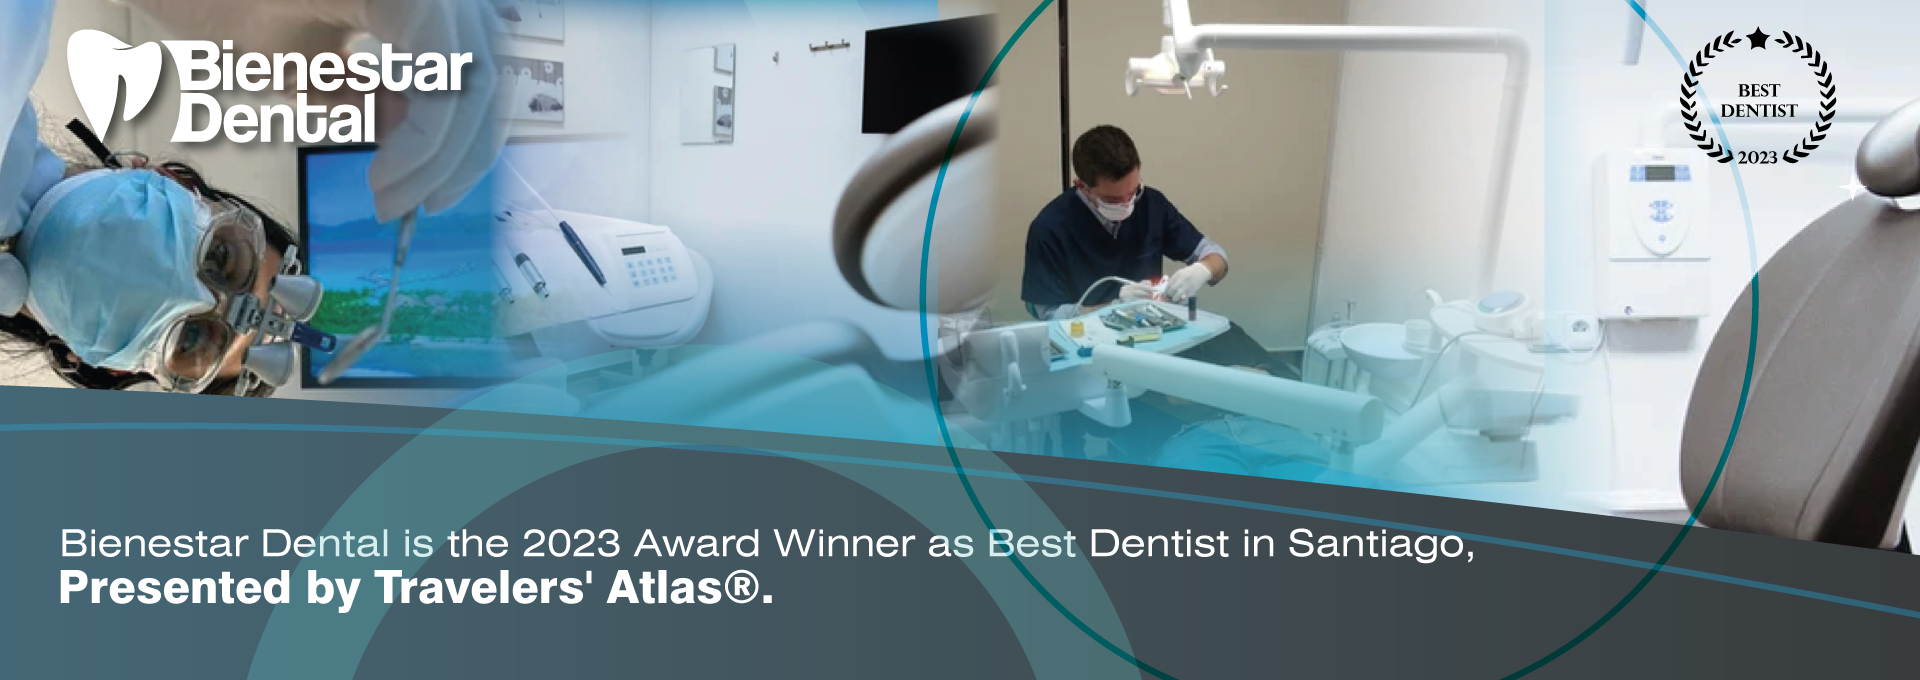 Premio mejor clinica dental